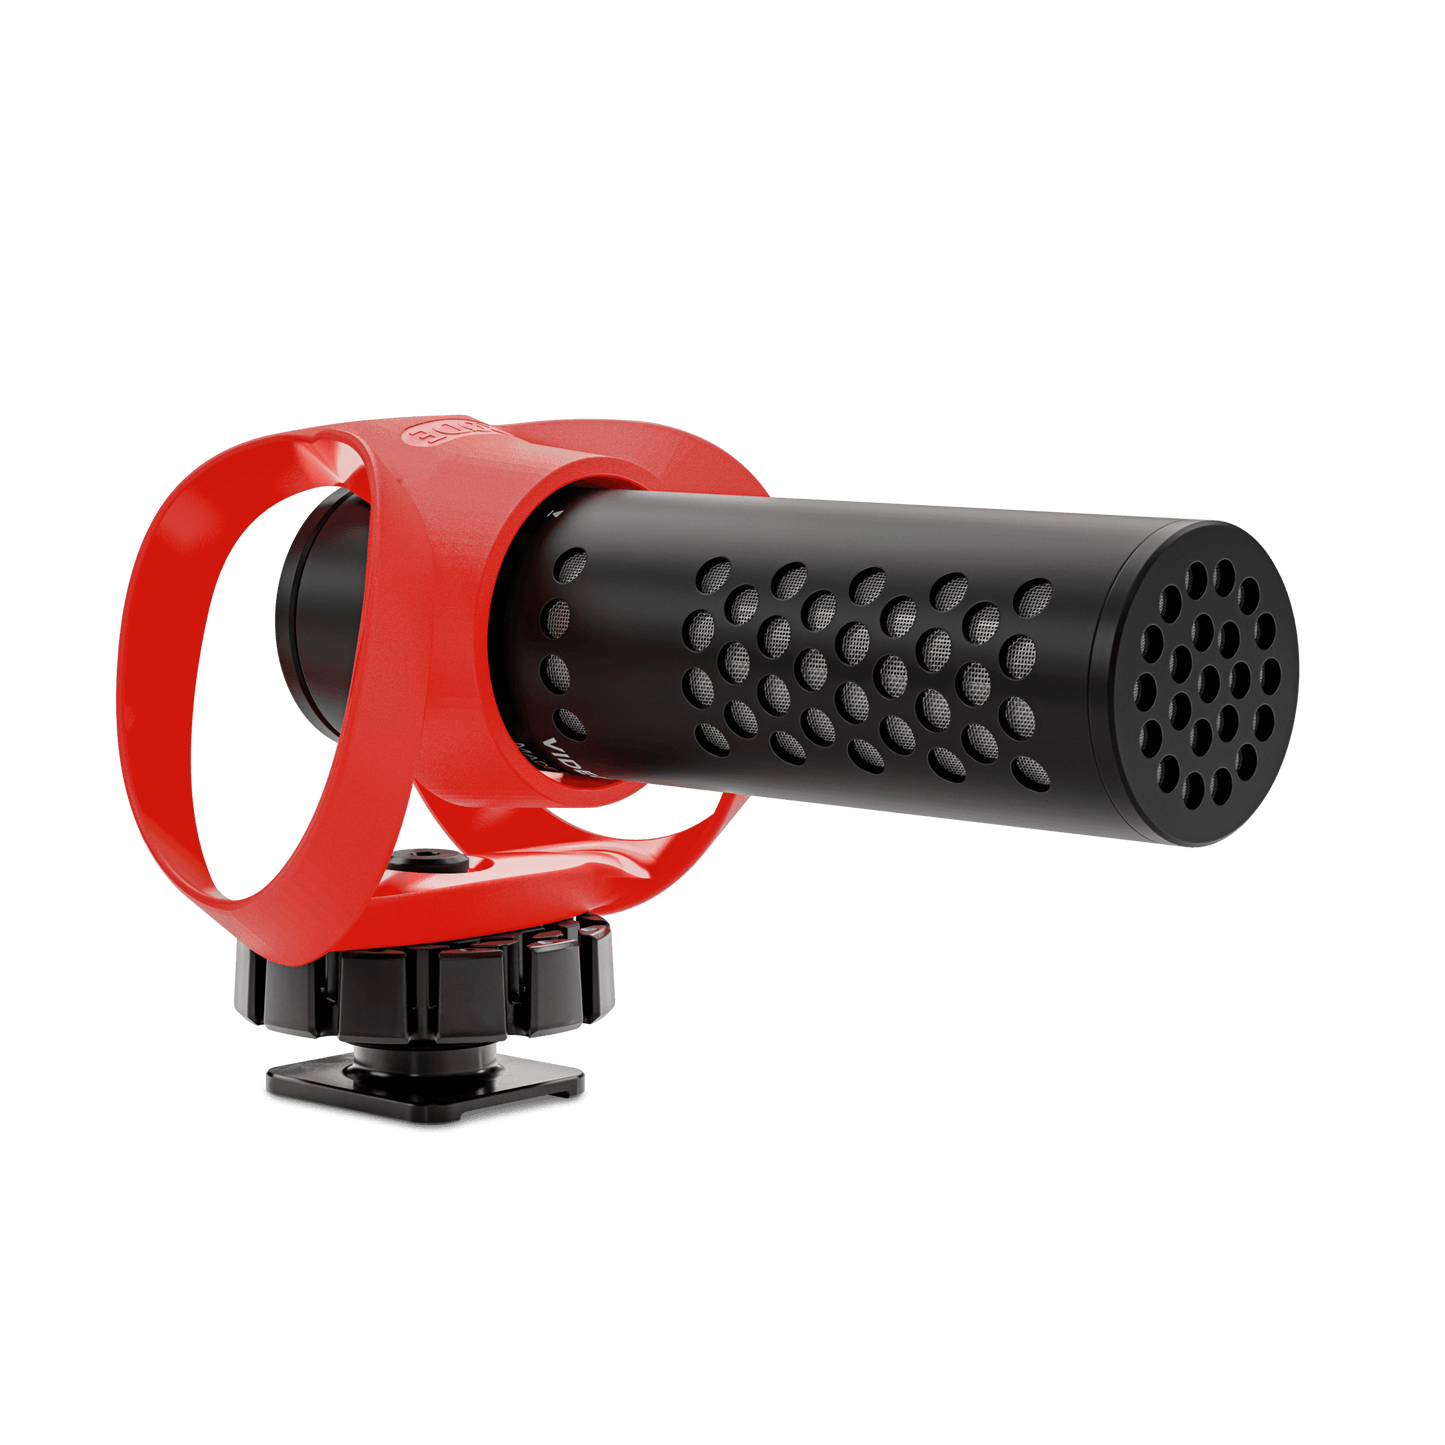 RODE VideoMicro II Ultracompact Camera-Mount Shotgun Microphone